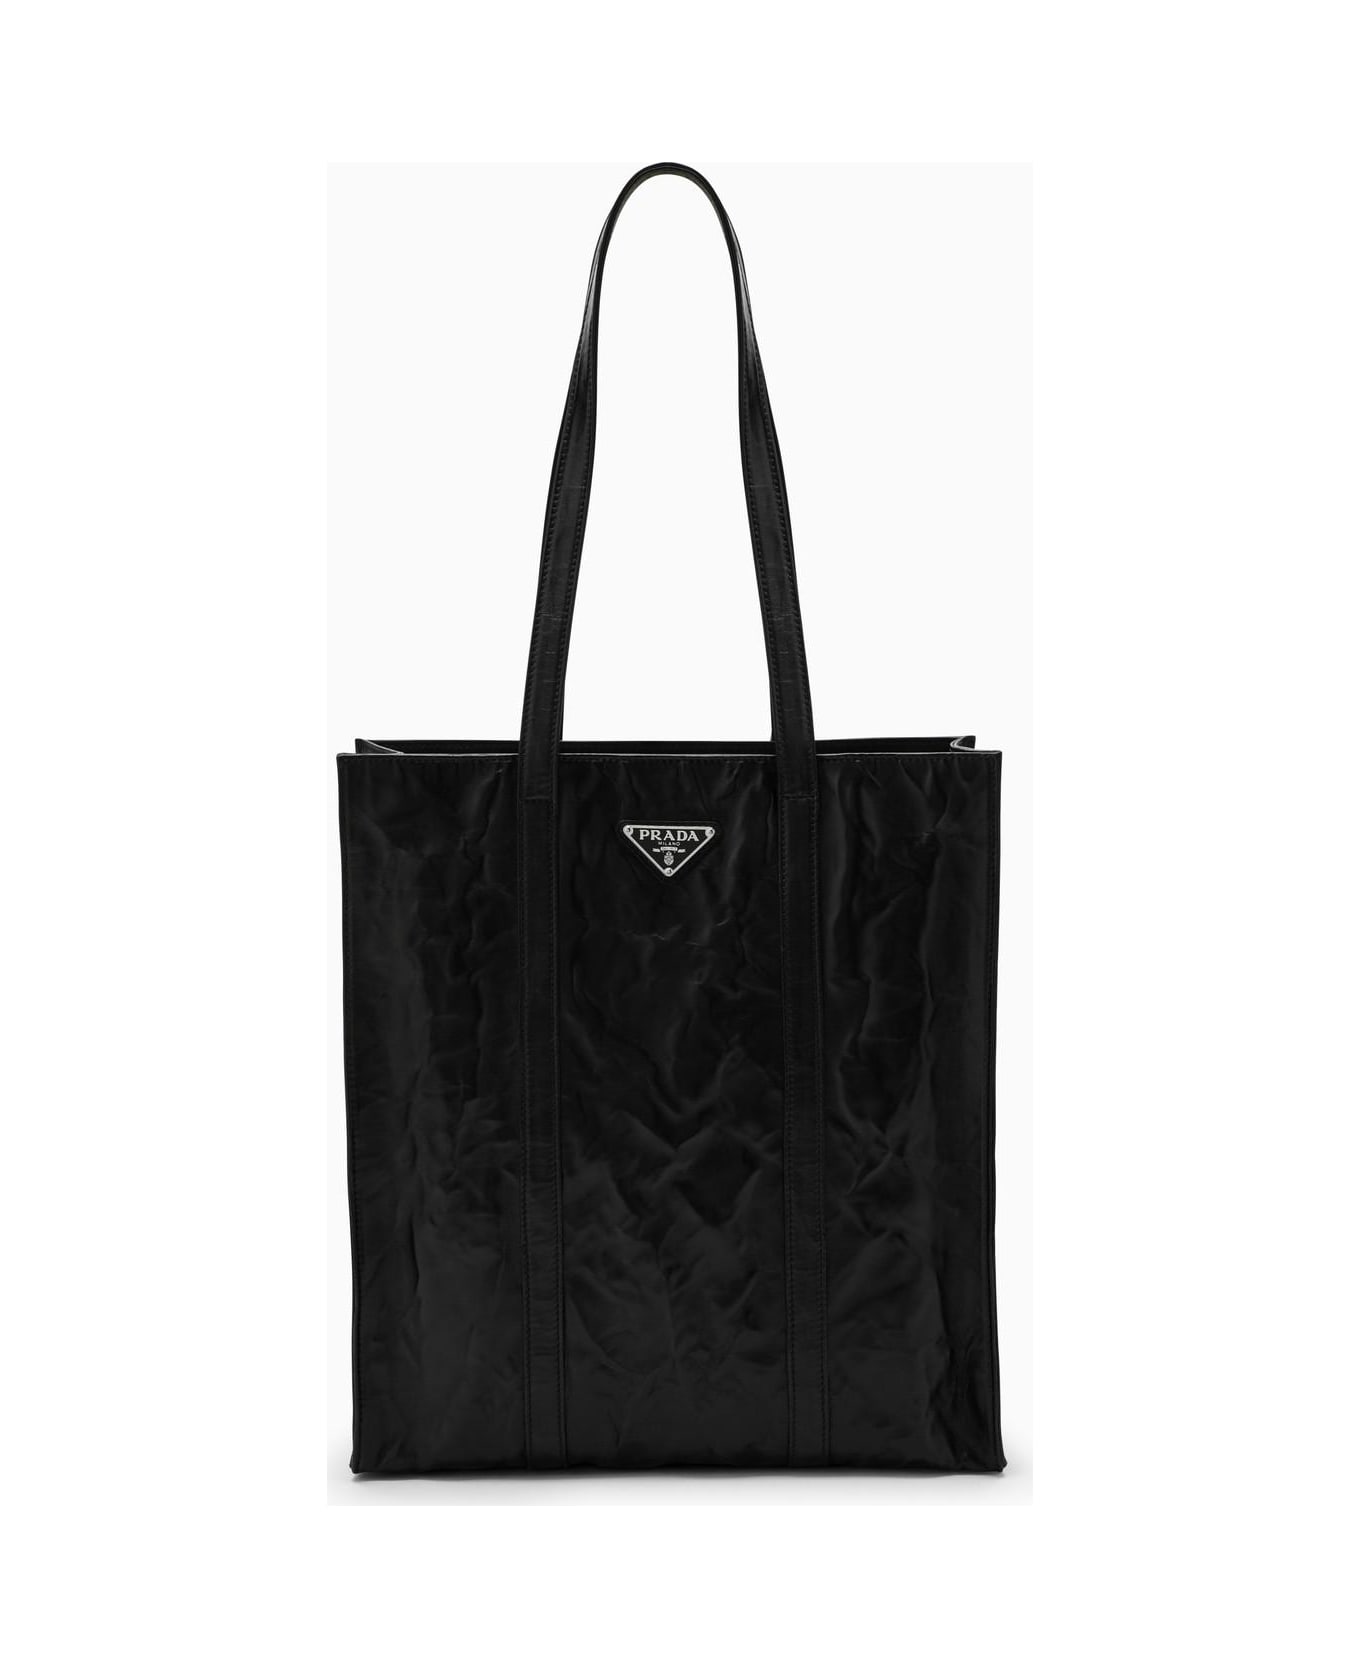 Prada Black Leather Bag - Nero